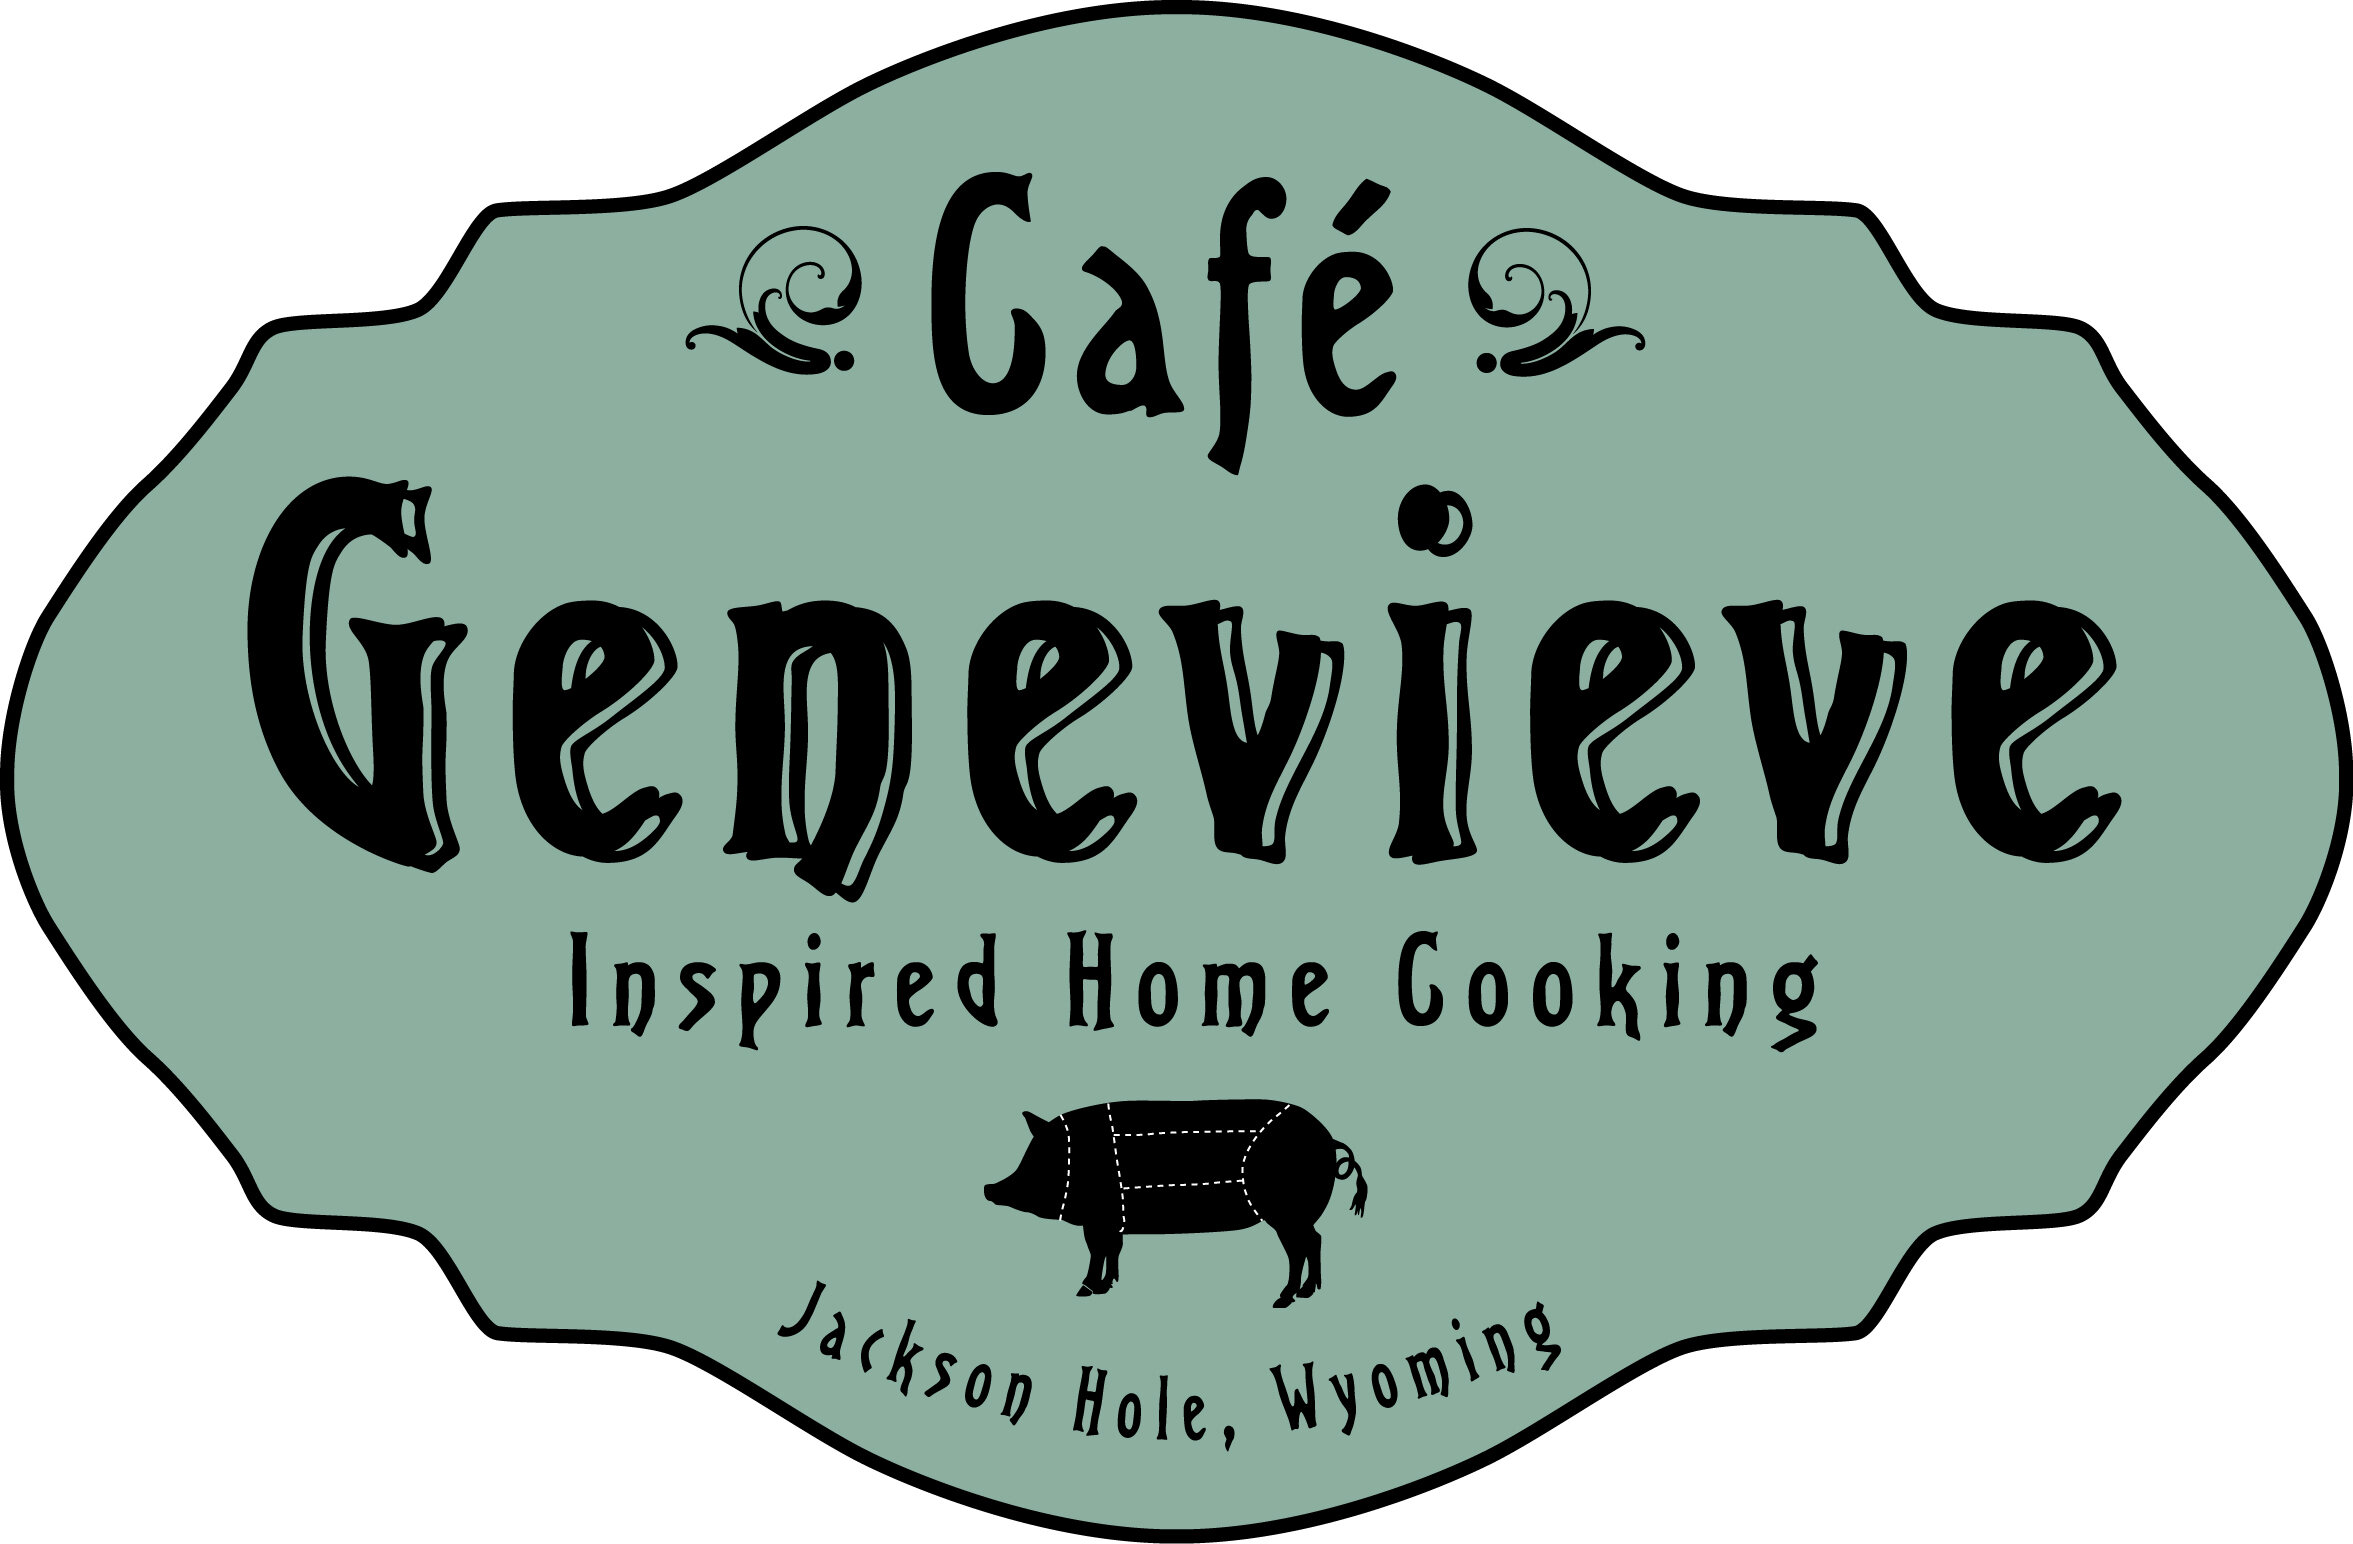 Cafe Genevieve